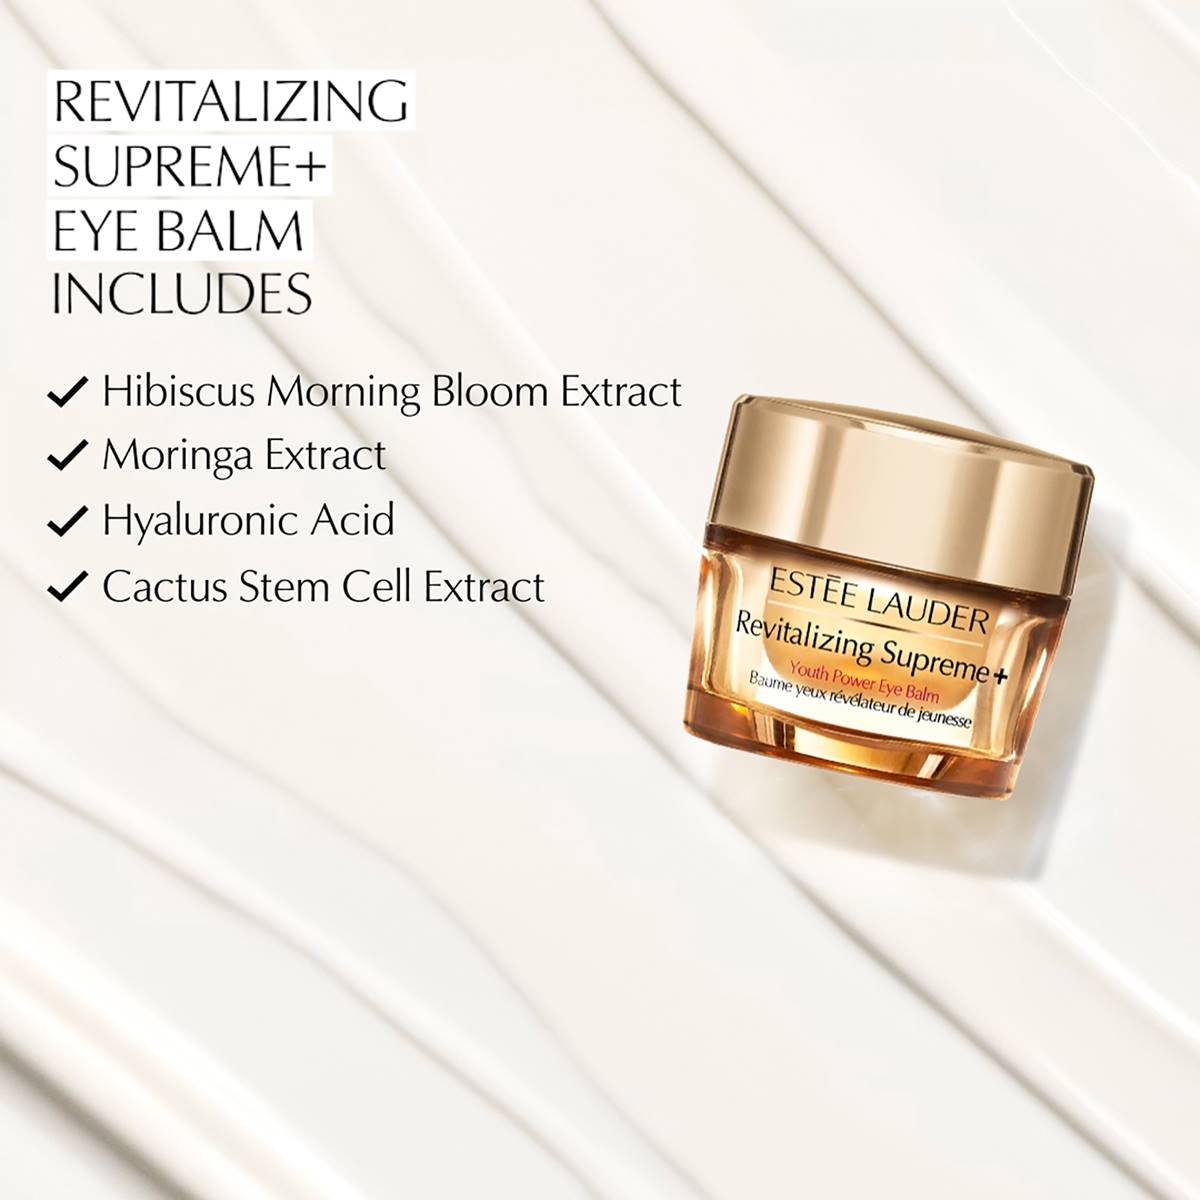 Estee Lauder(tm) Revitalizing Supreme+ Eye Balm Skincare Set